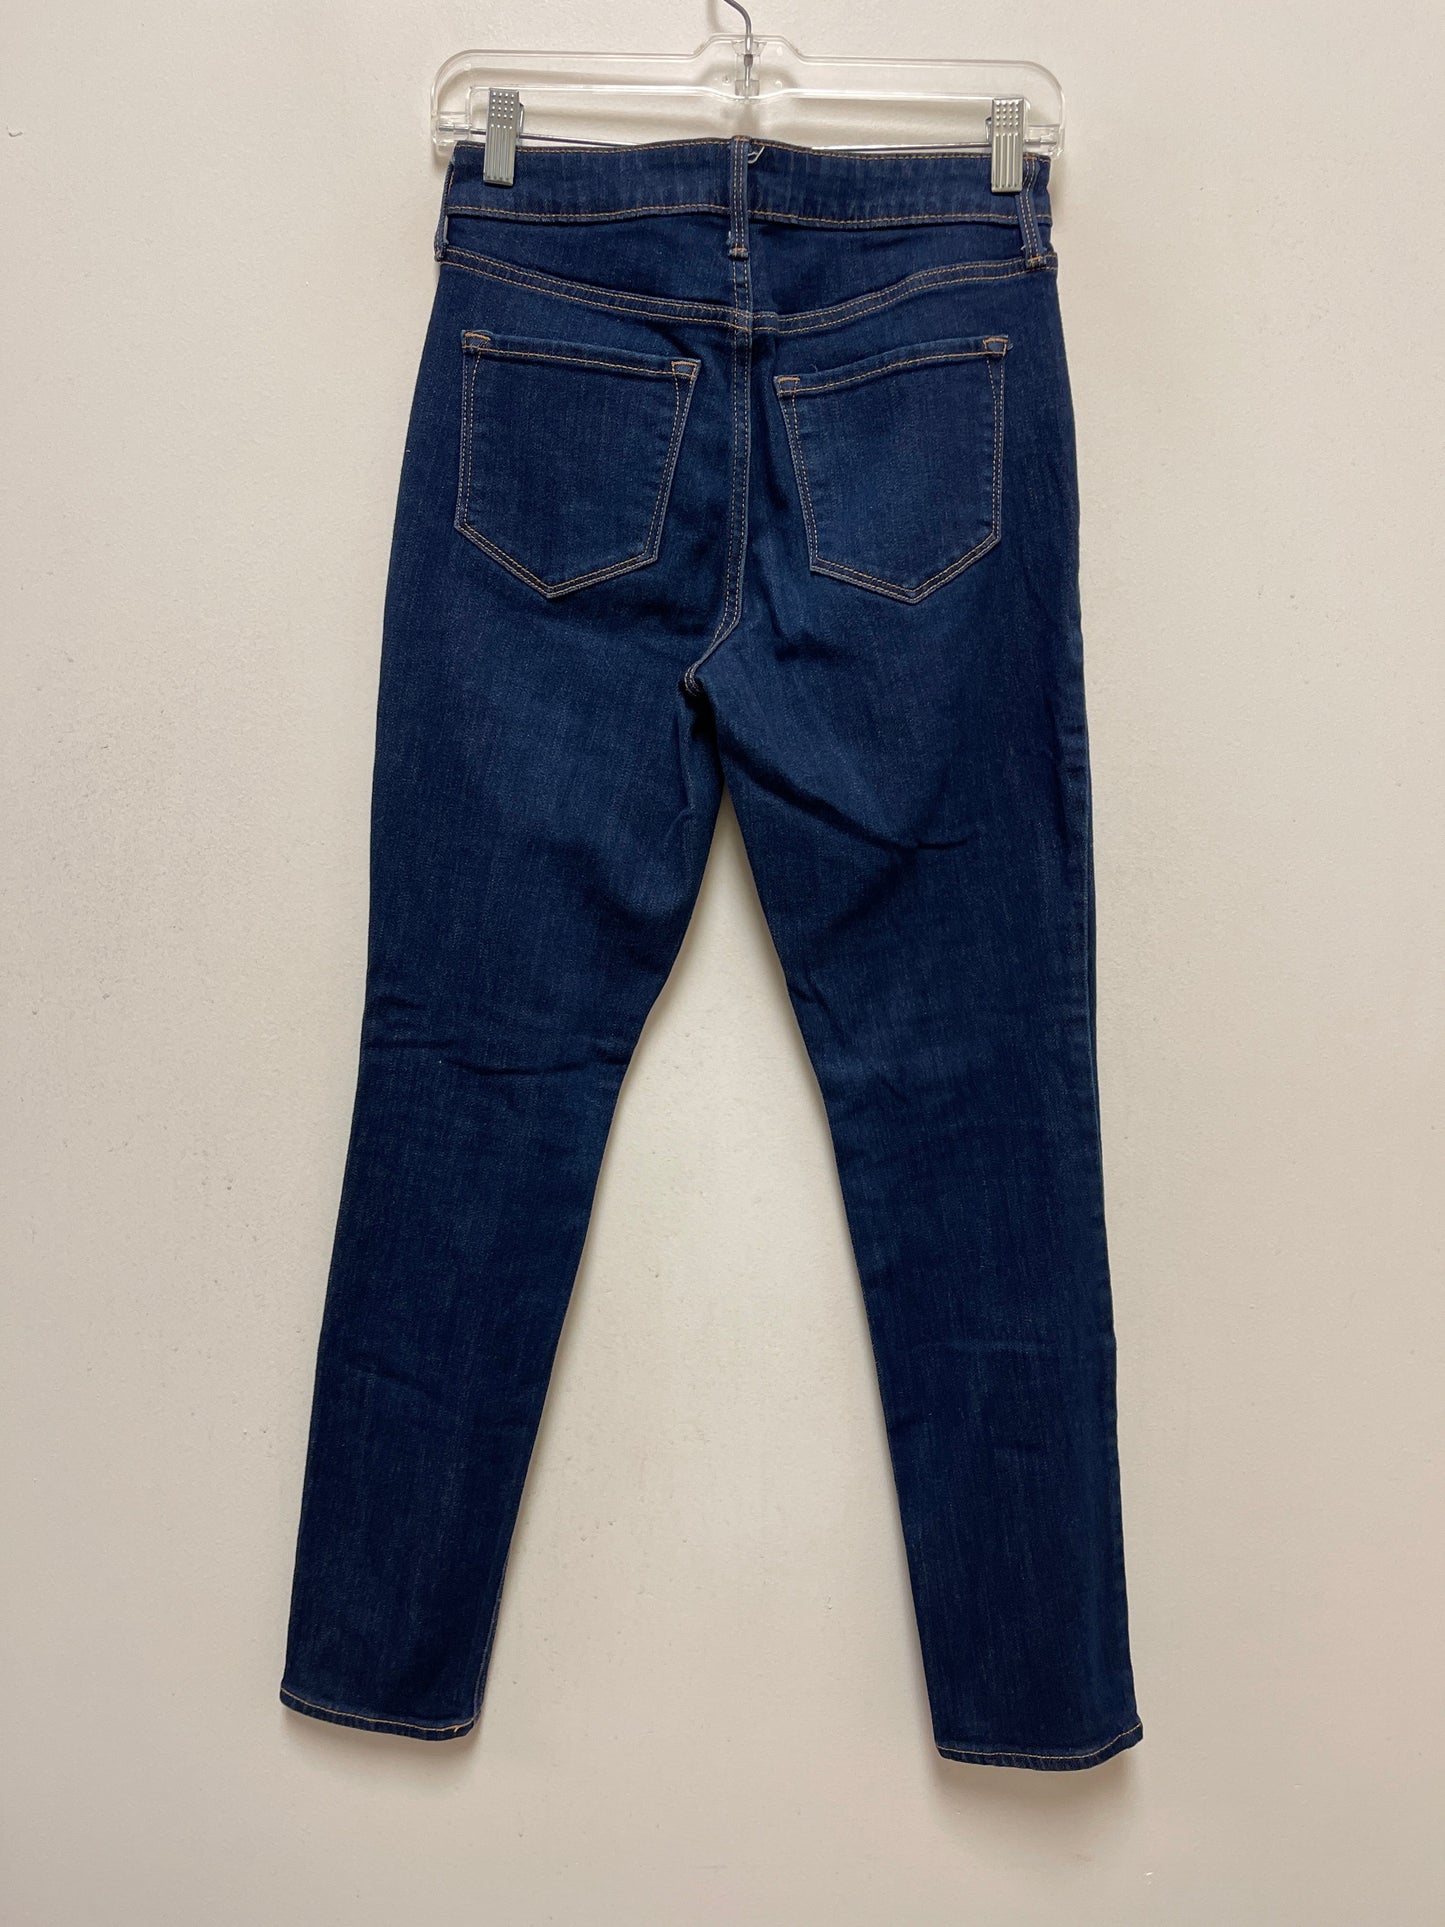 Blue Denim Jeans Straight Old Navy, Size 2